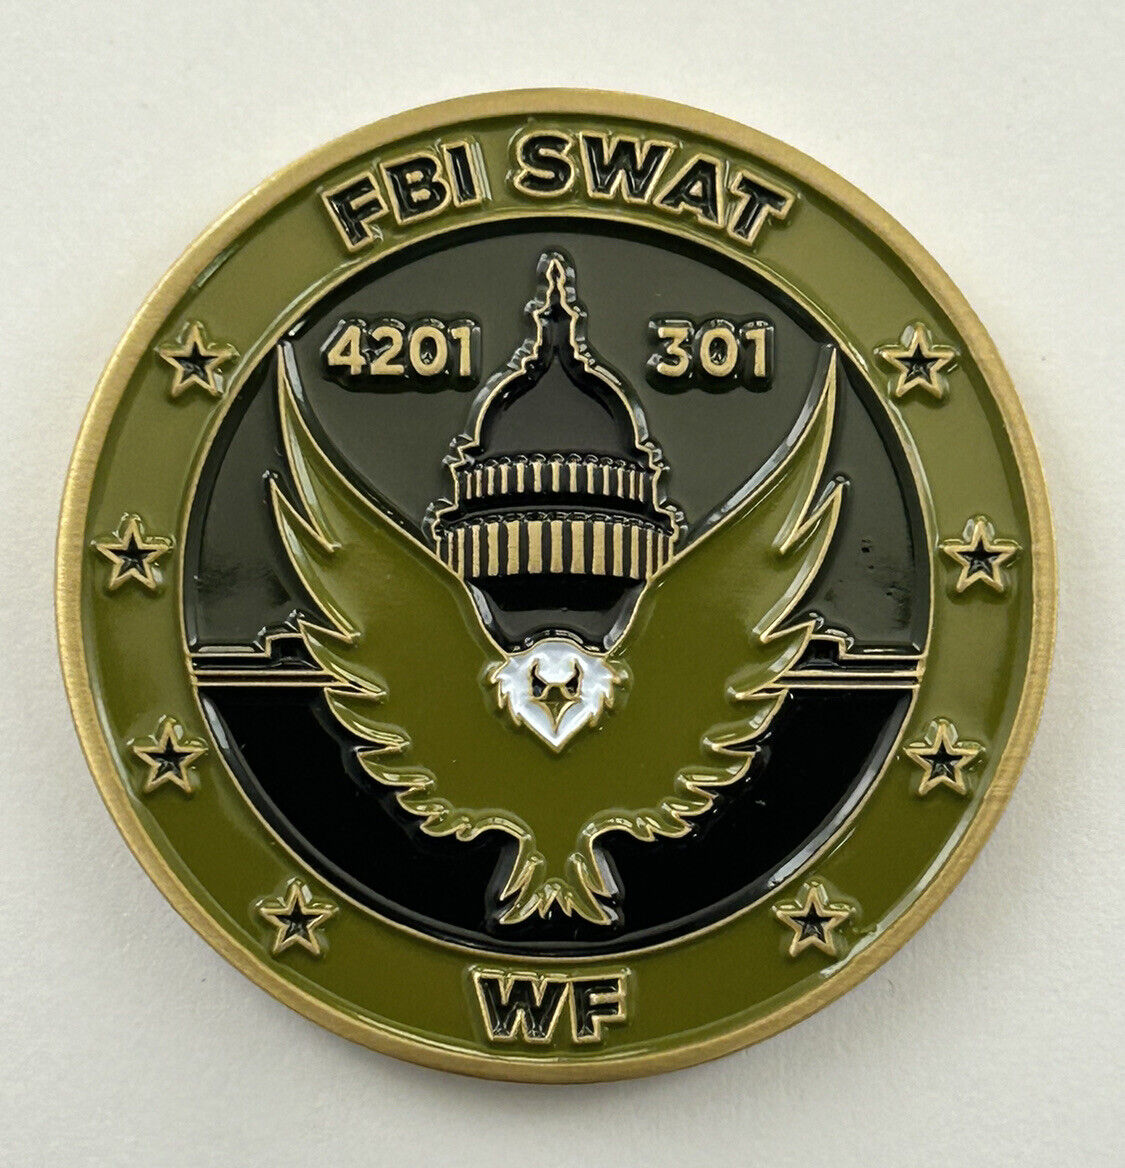 DOJ FBI WFO Washington Field Office Division SWAT Challenge Coin